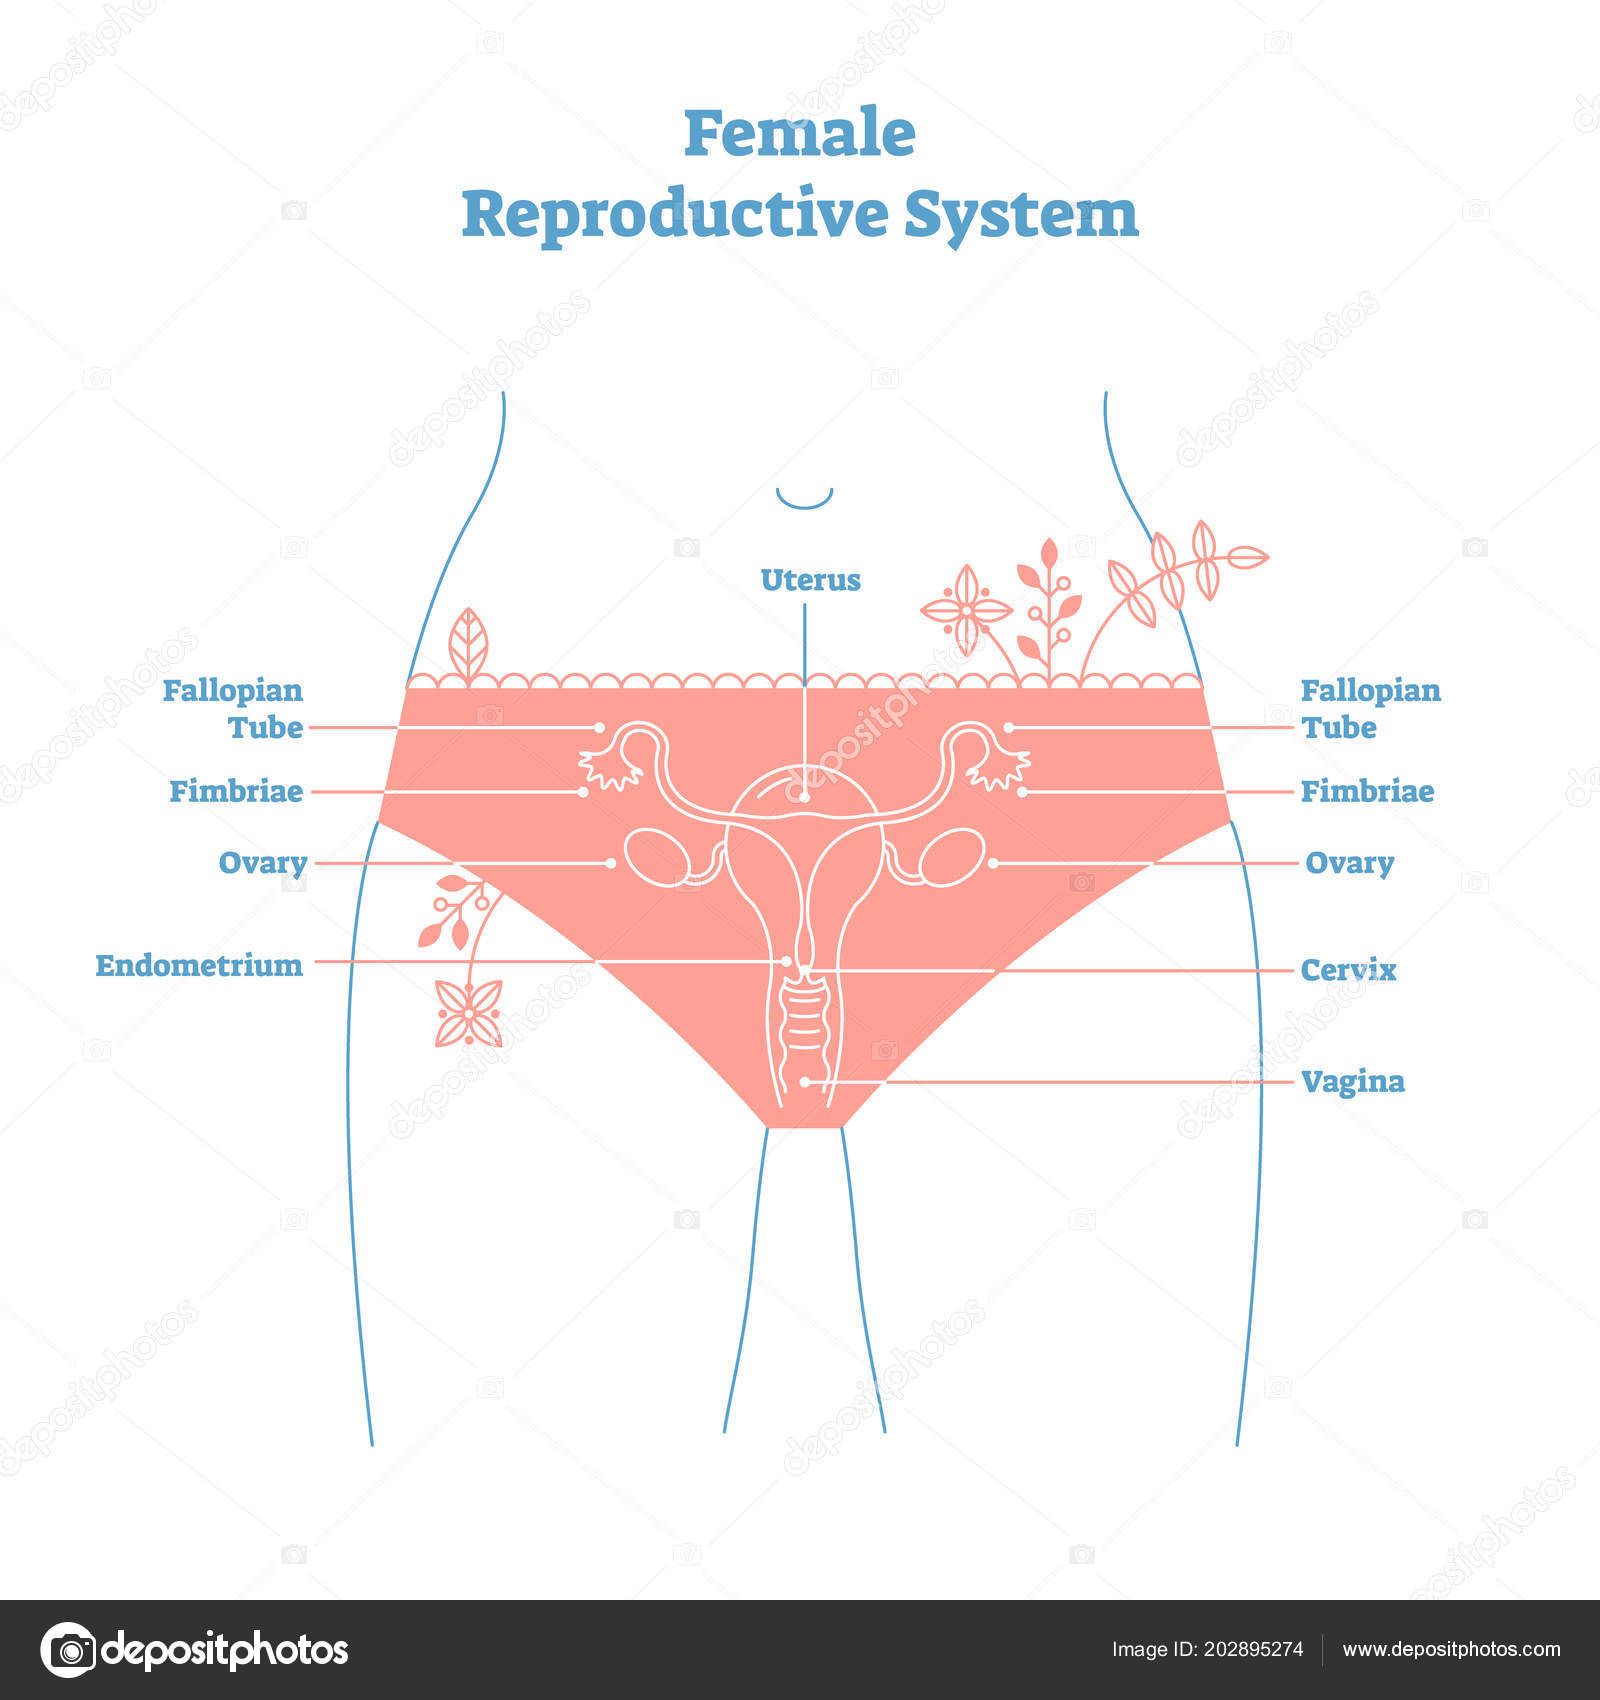 Reproductive System Female Organs Diagram - Female Reproductive System